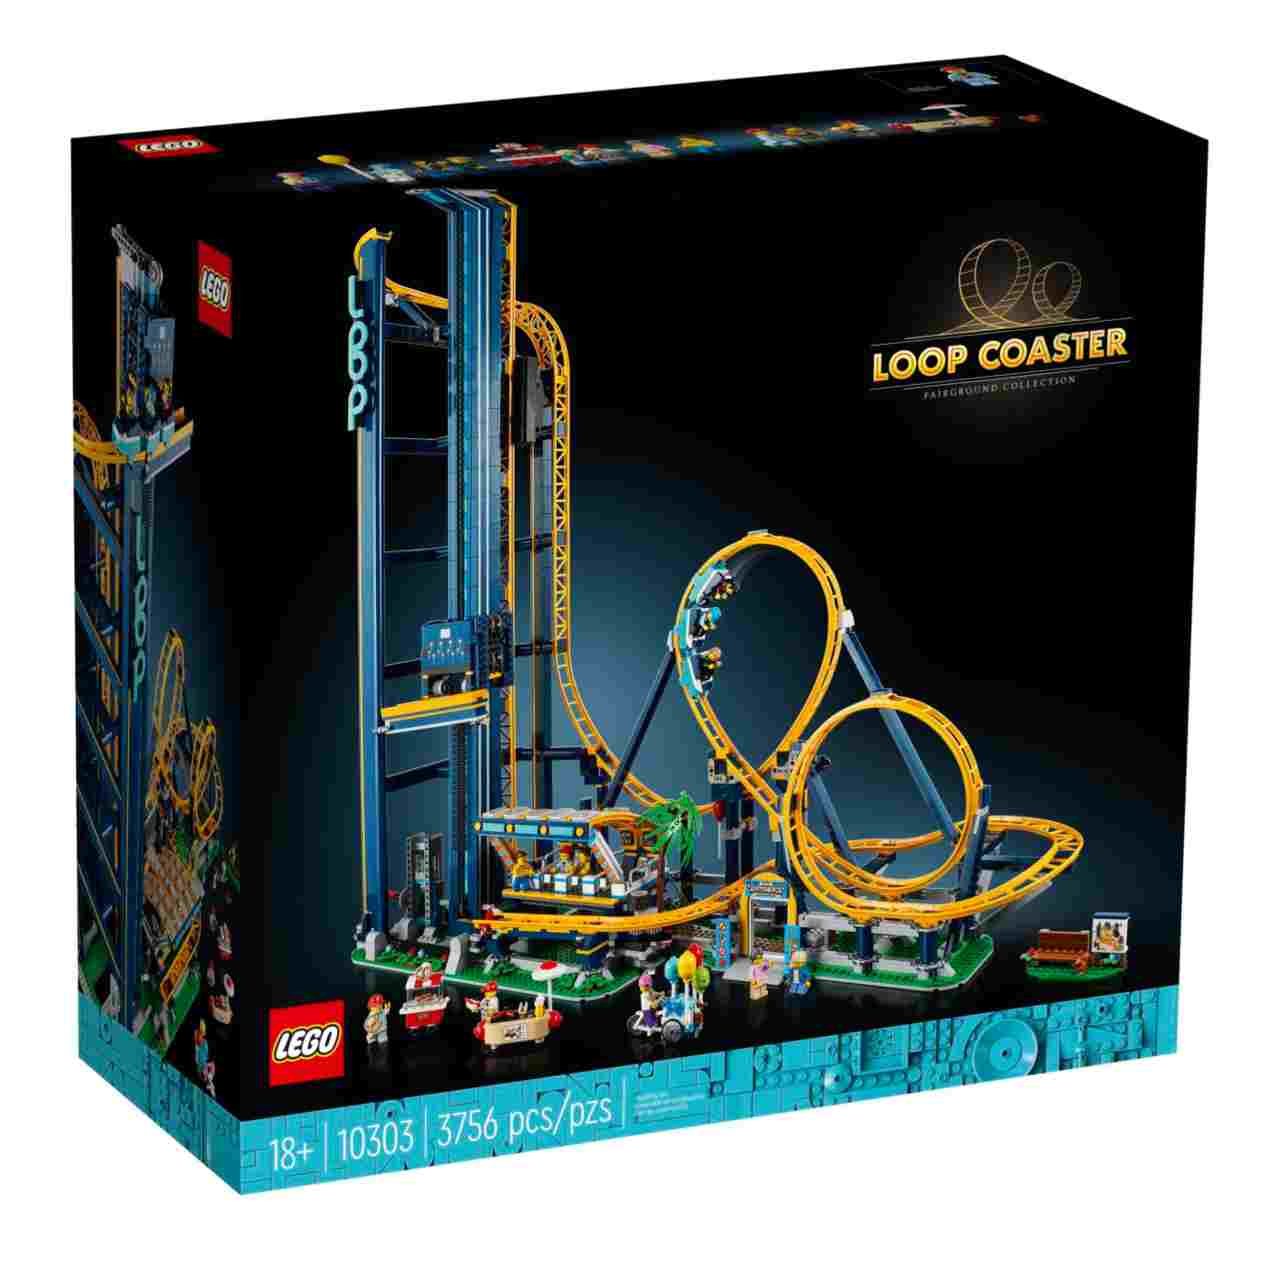 Lego: in arrivo il set montagne russe